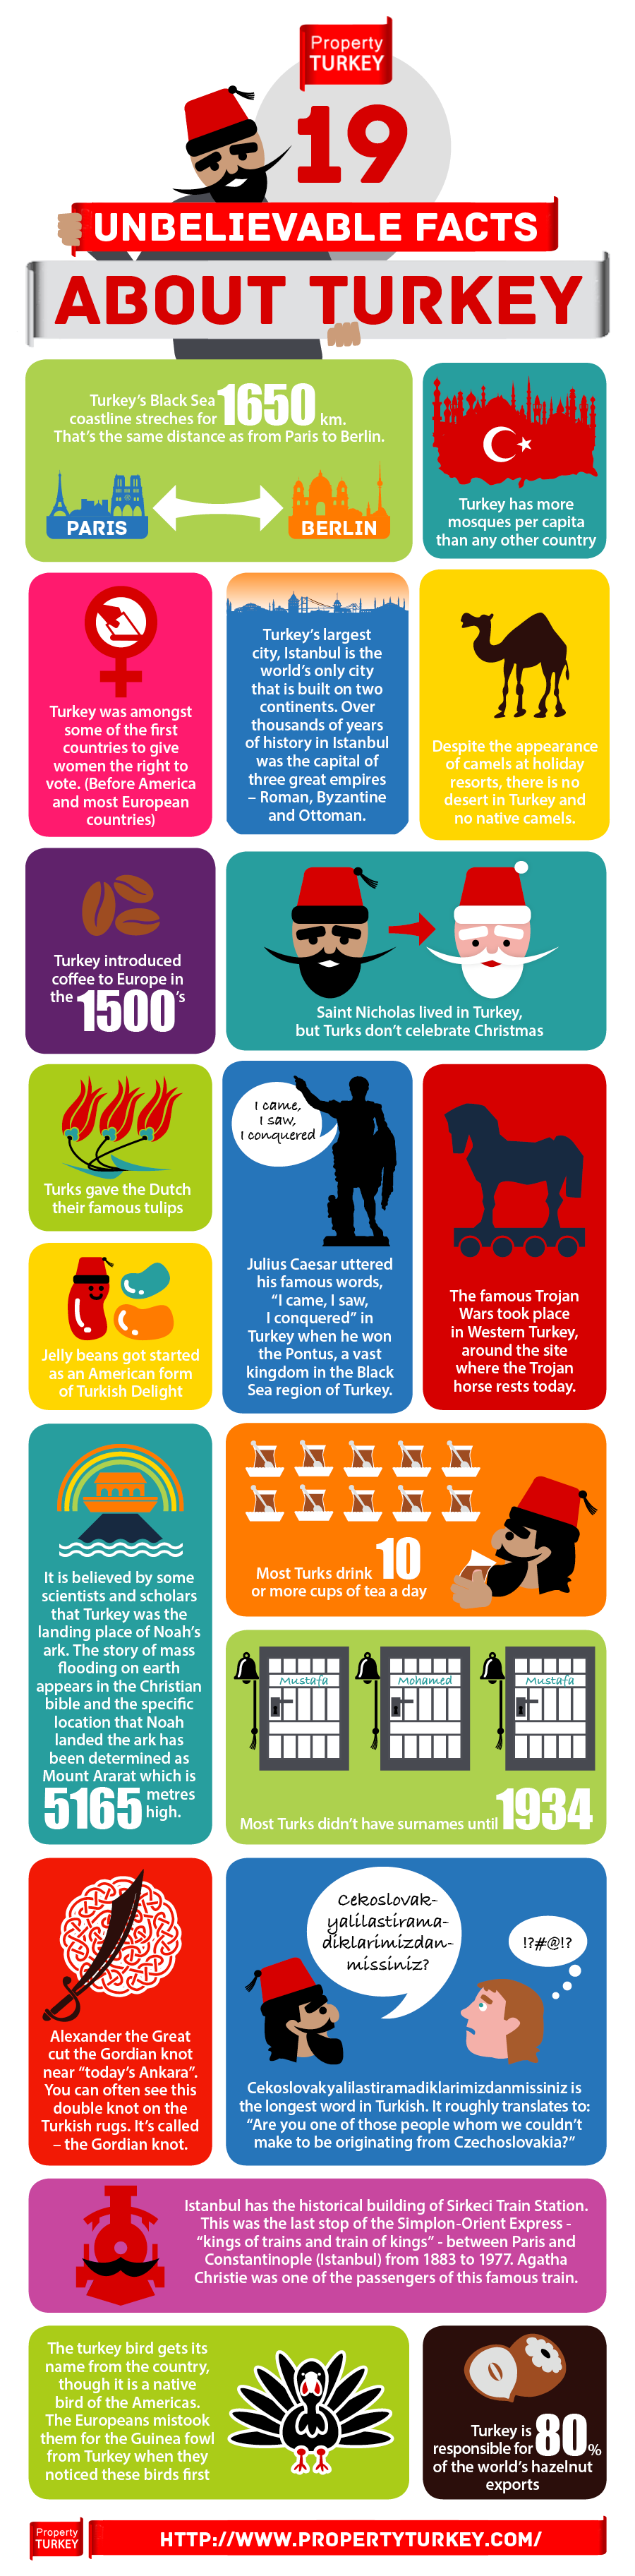 Unbelievable facts about Turkey